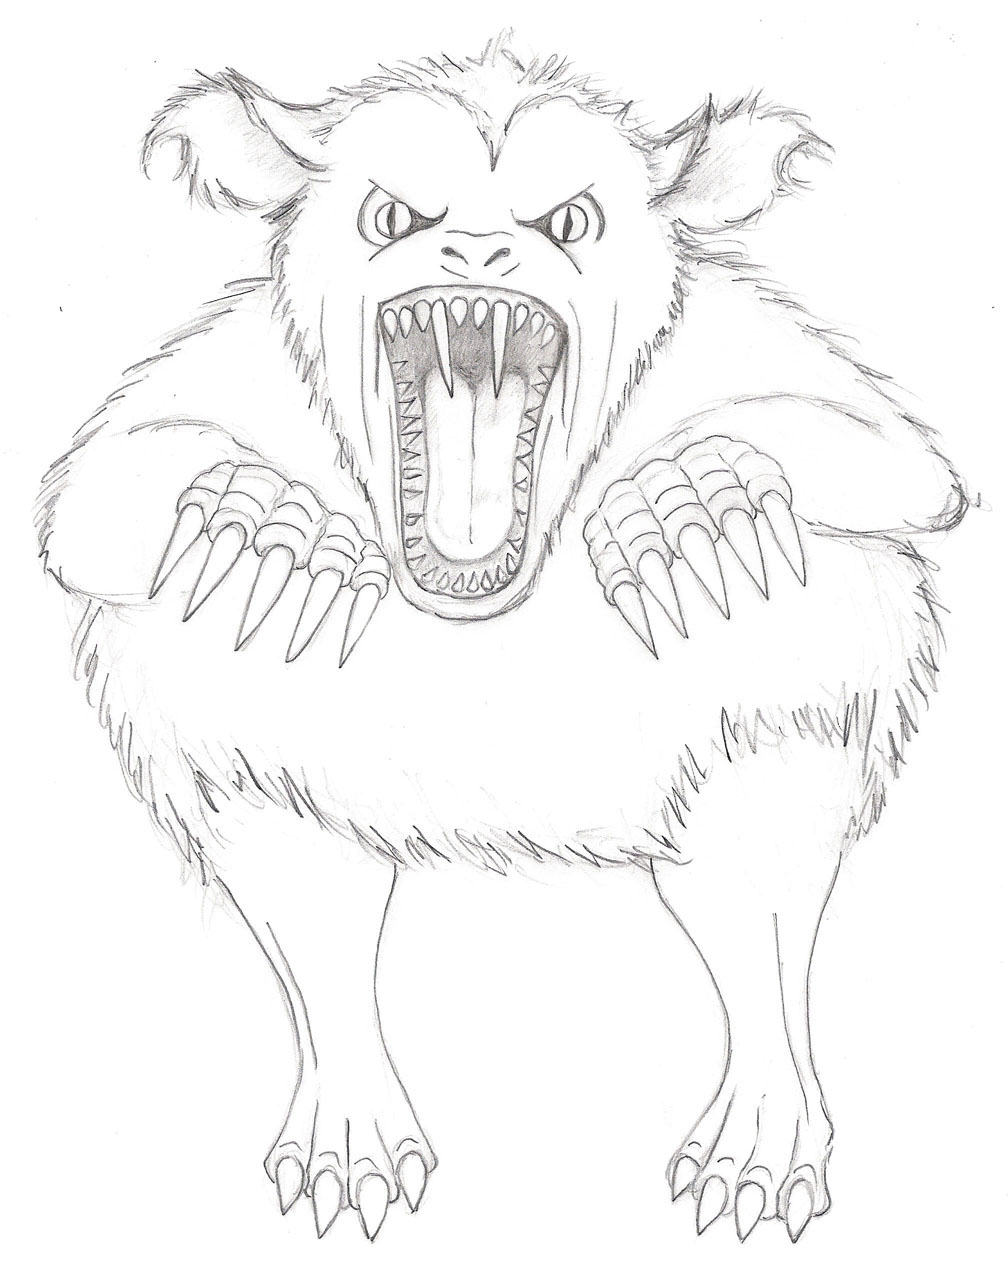 artist impression of the Burnell Beast